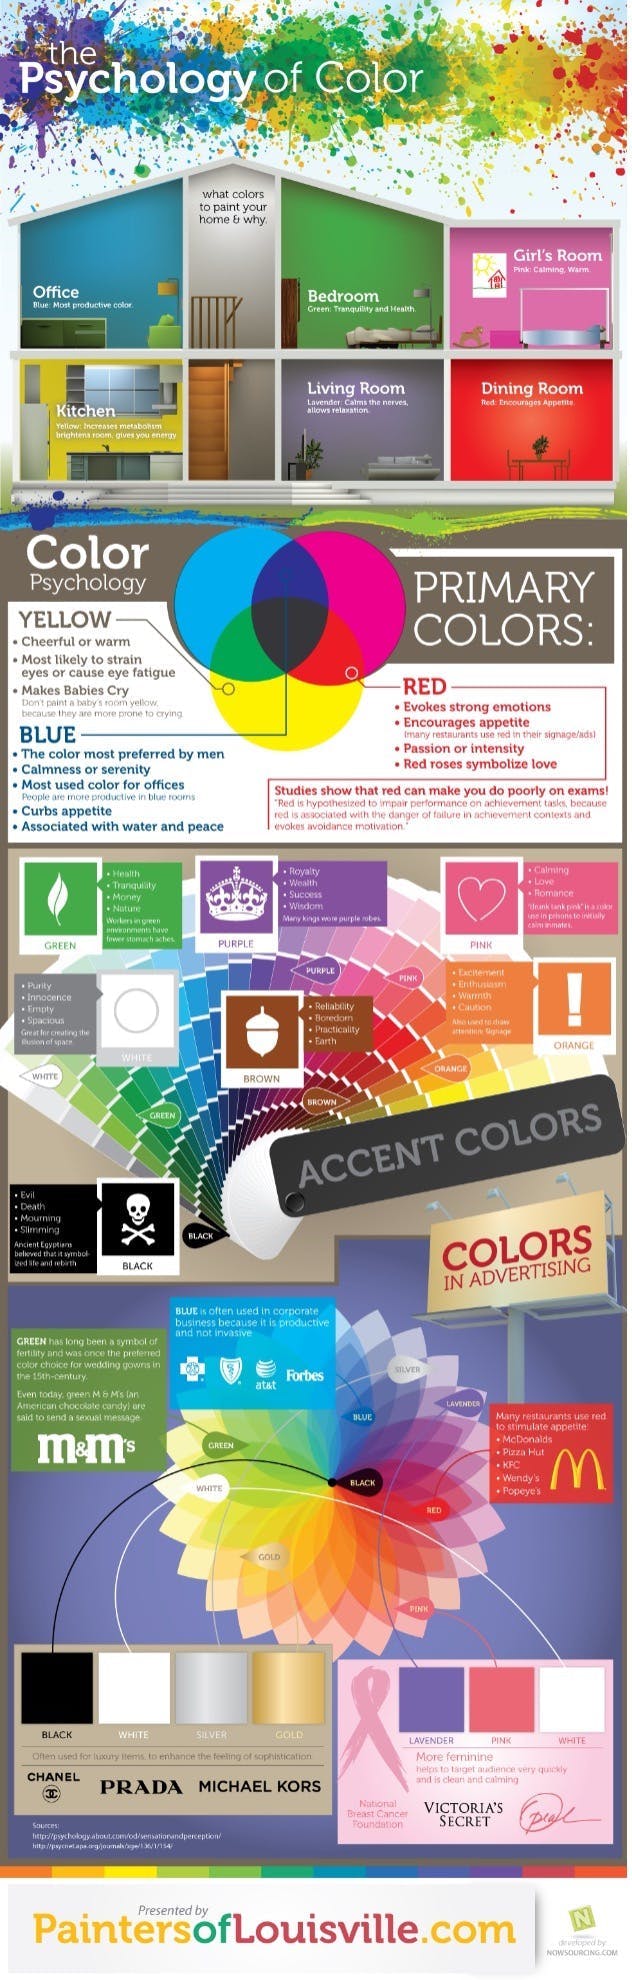 Kleurenpsychologie infographic.